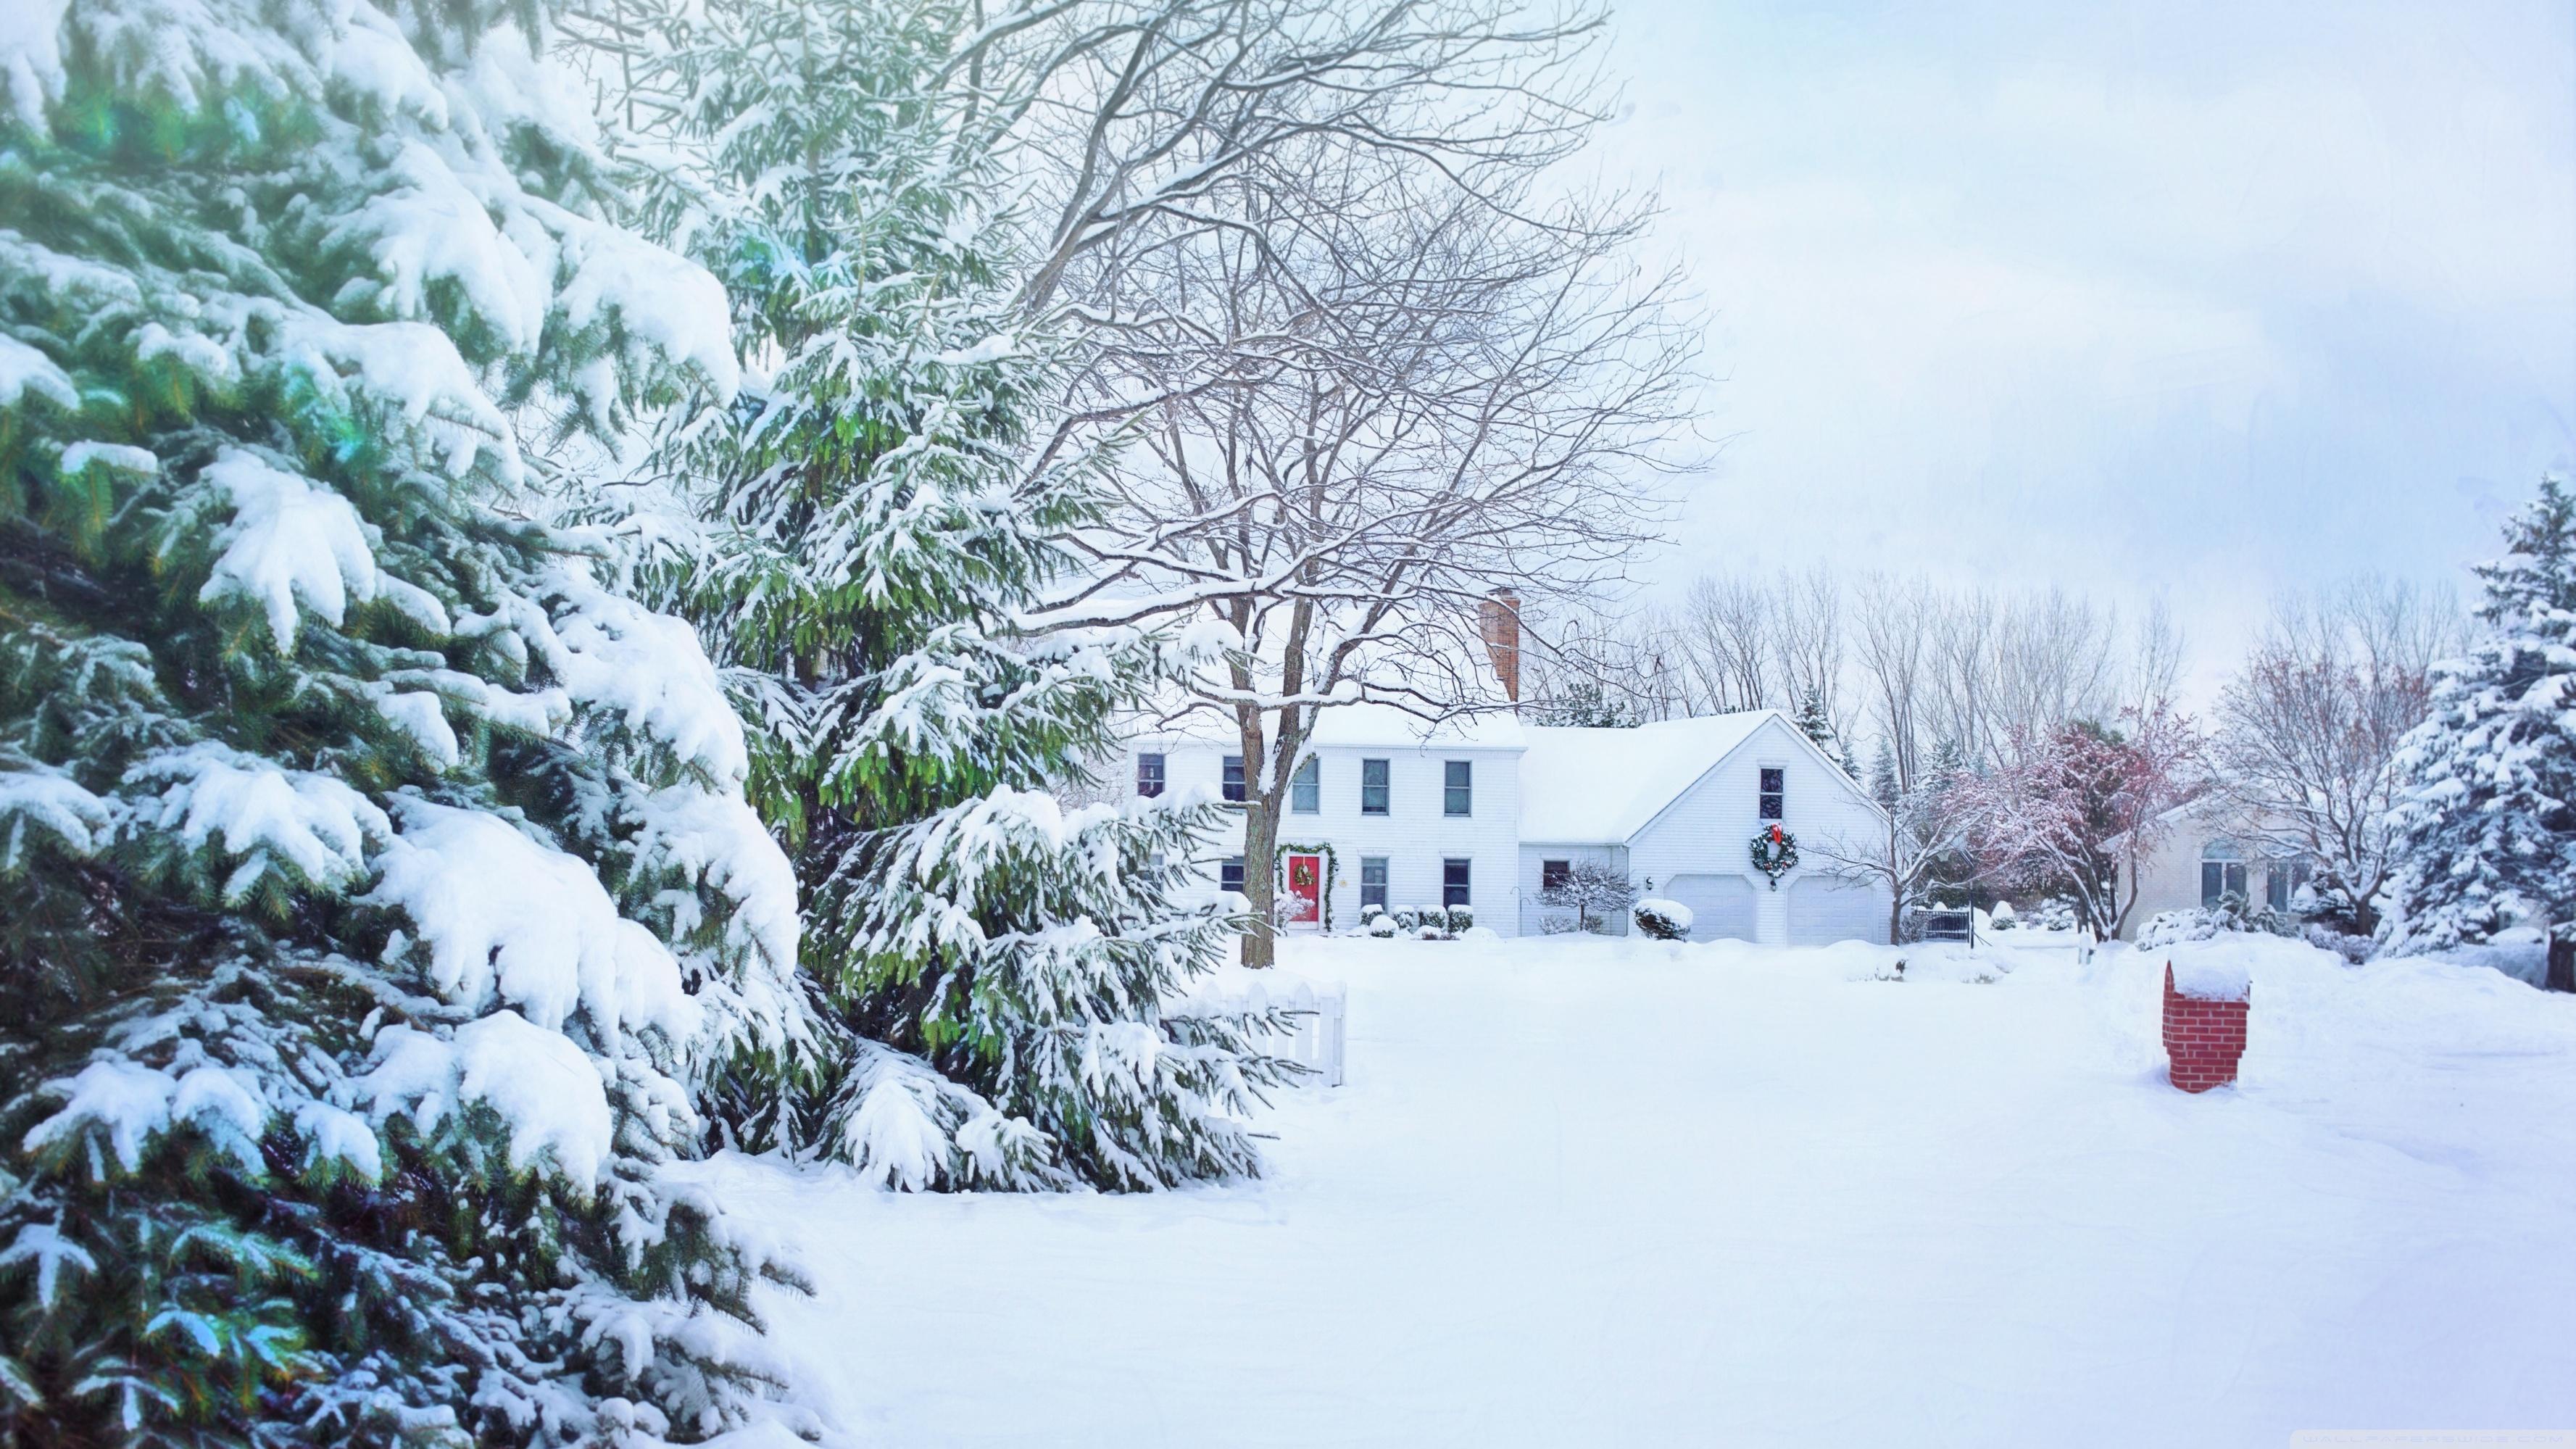 House, Snow, Winter Holiday UHD Desktop Wallpaper for 4K